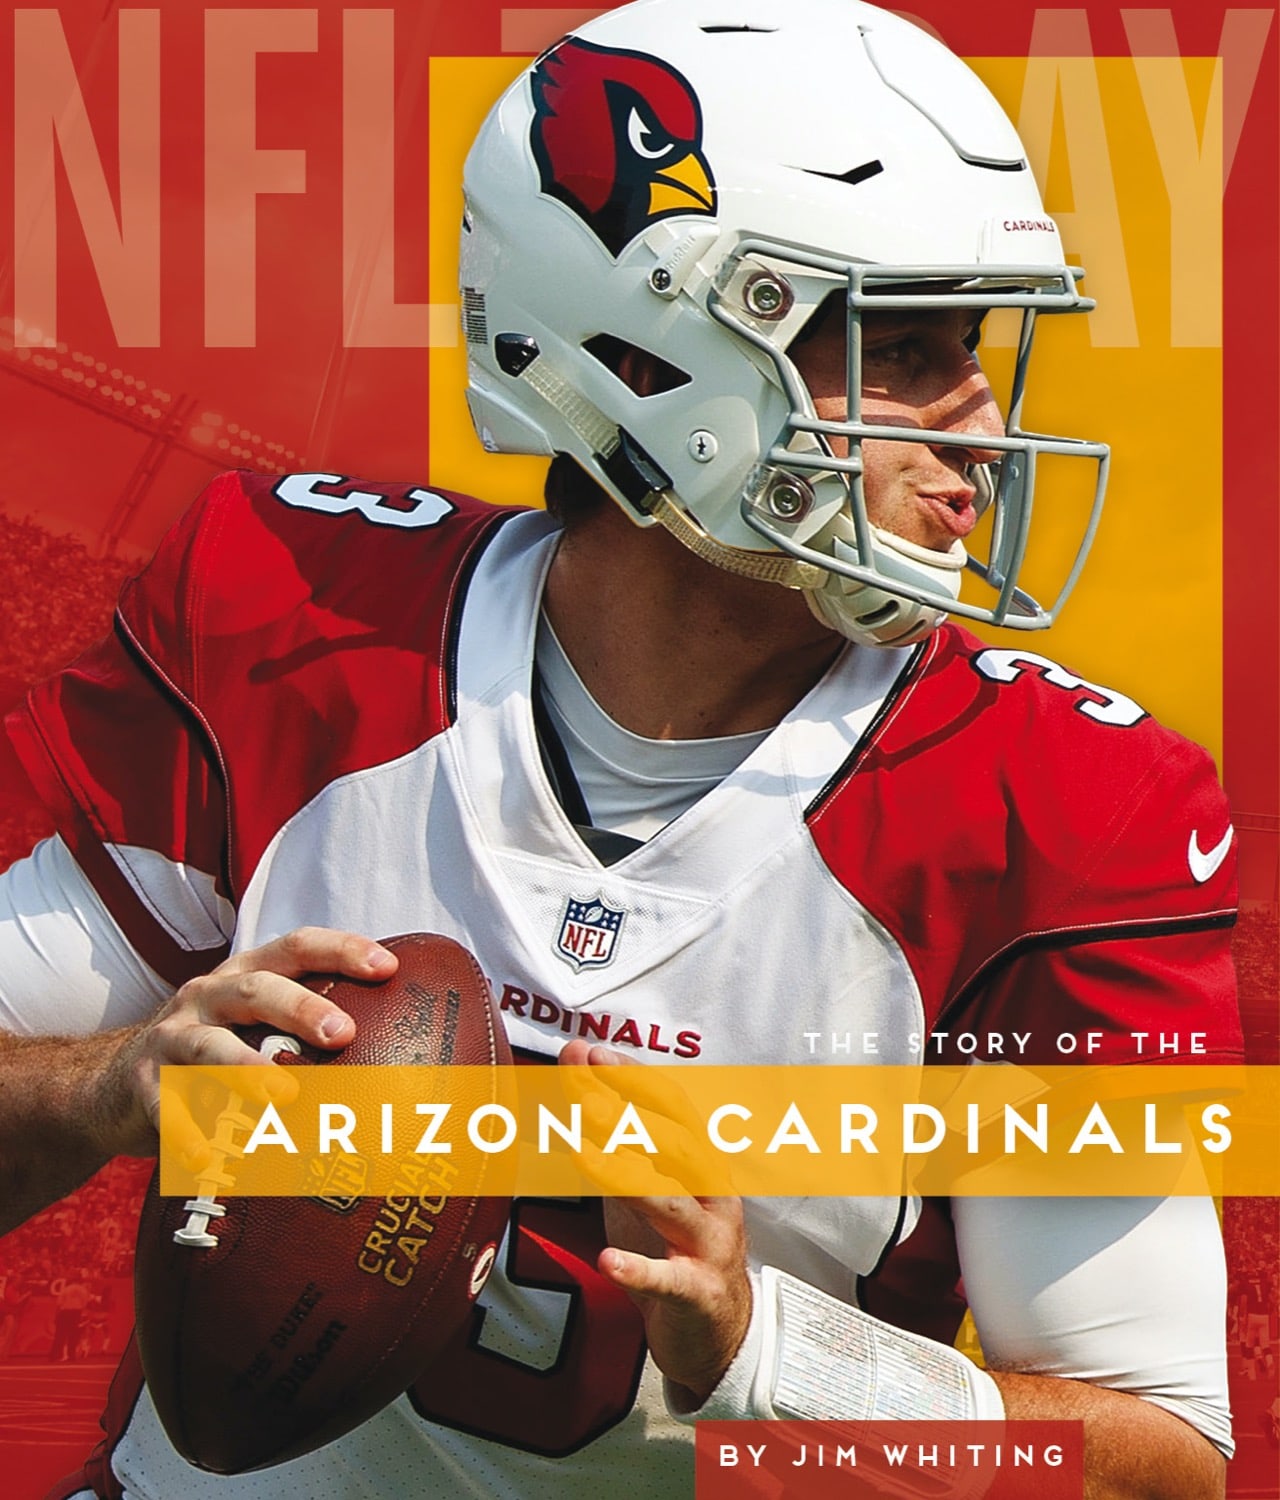 Arizona Cardinals News - NFL